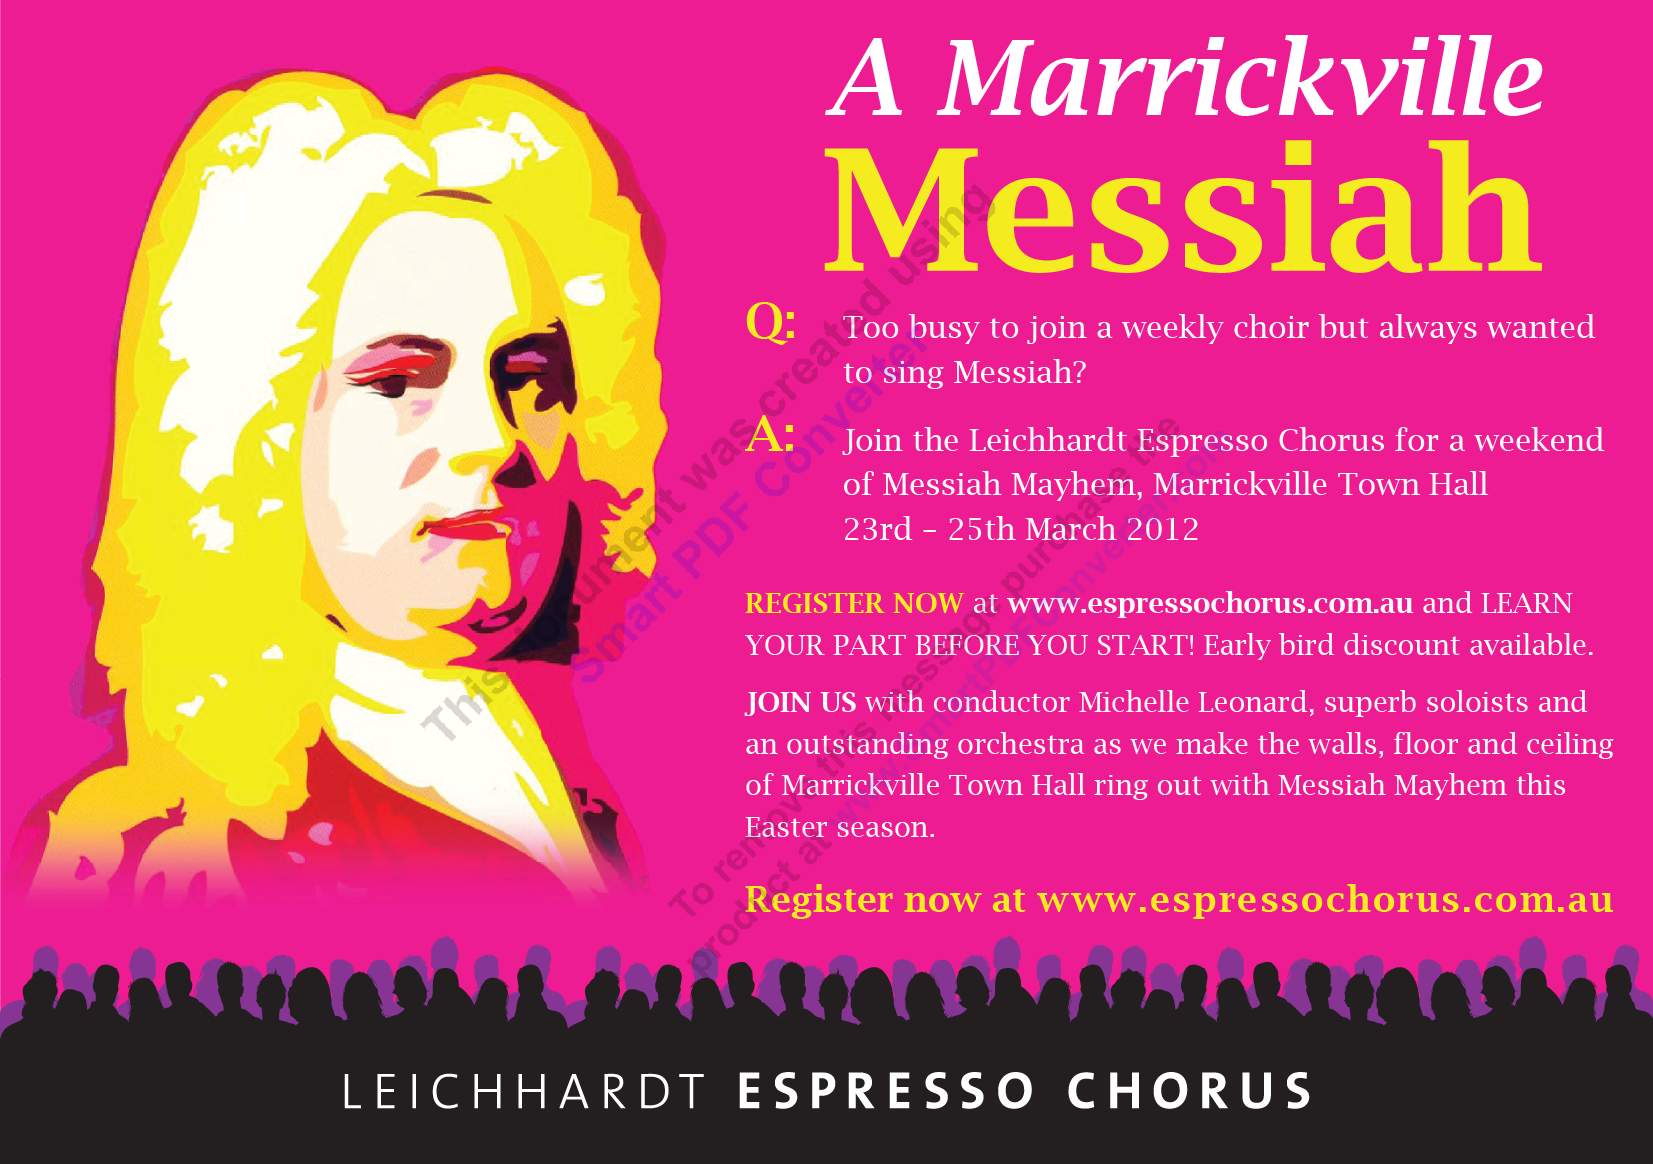 sing messiah with the leichhardt espresso chorus